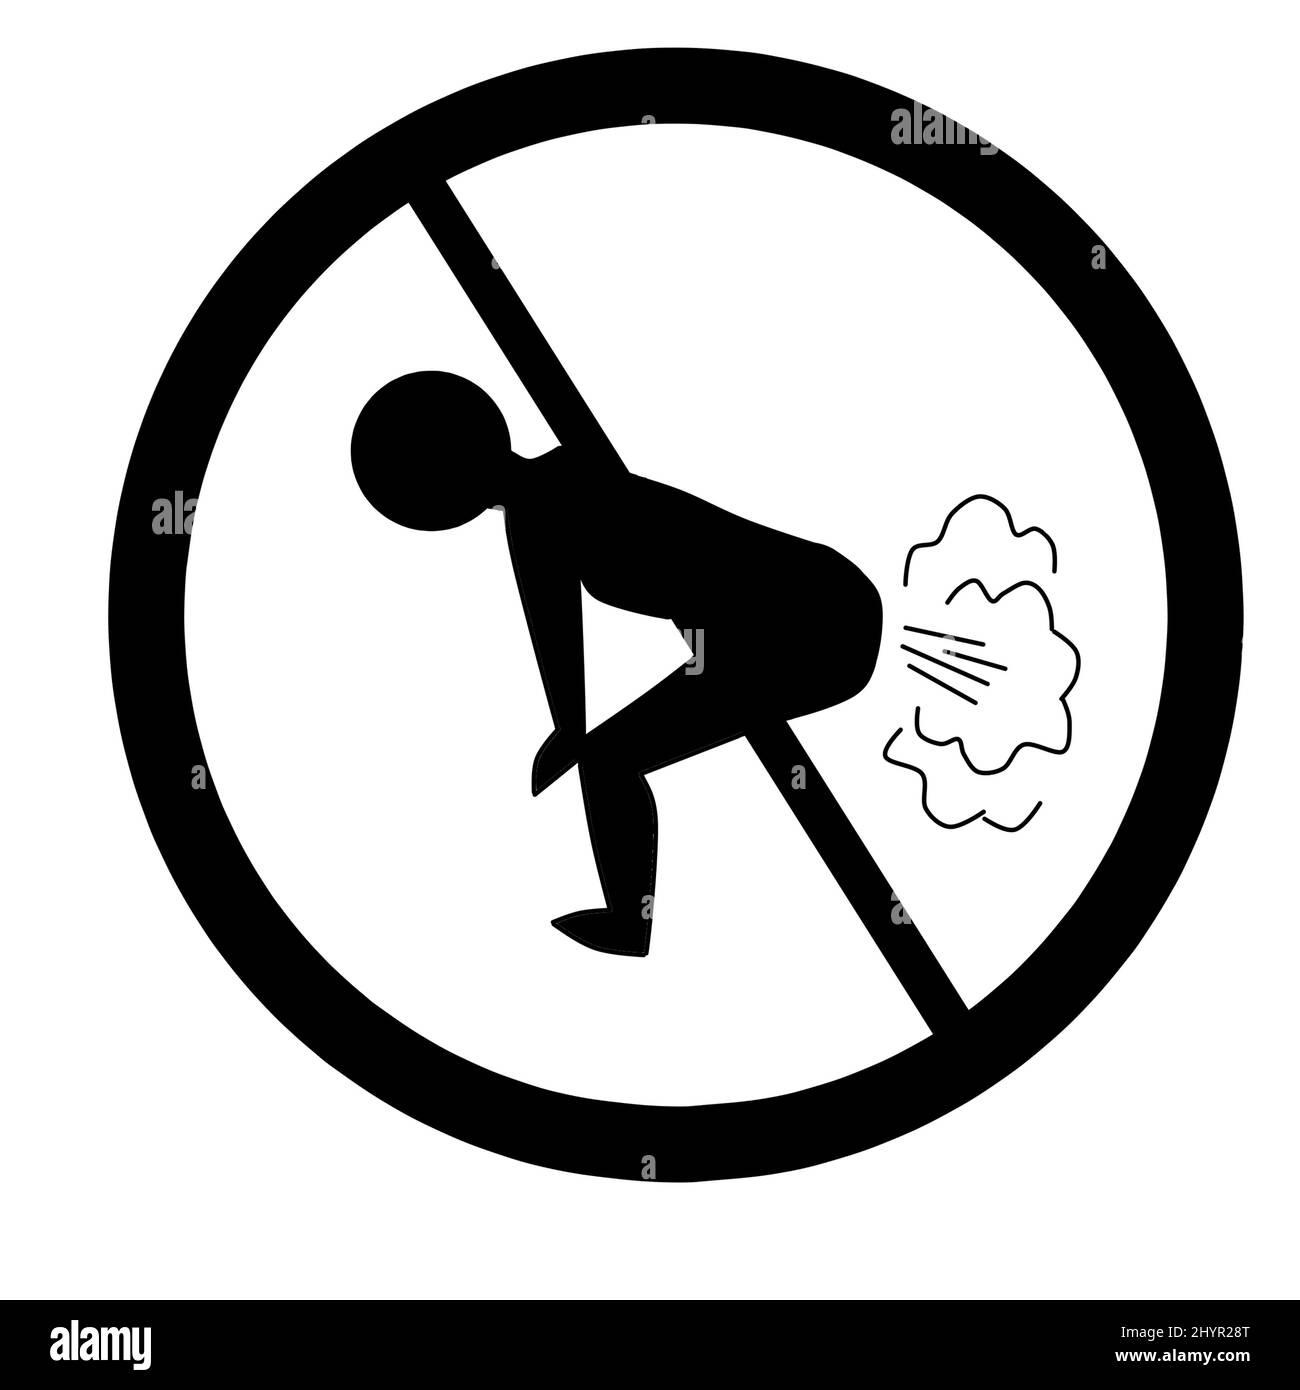 symbol of prohibition, prohibition of farts. Stock Photo